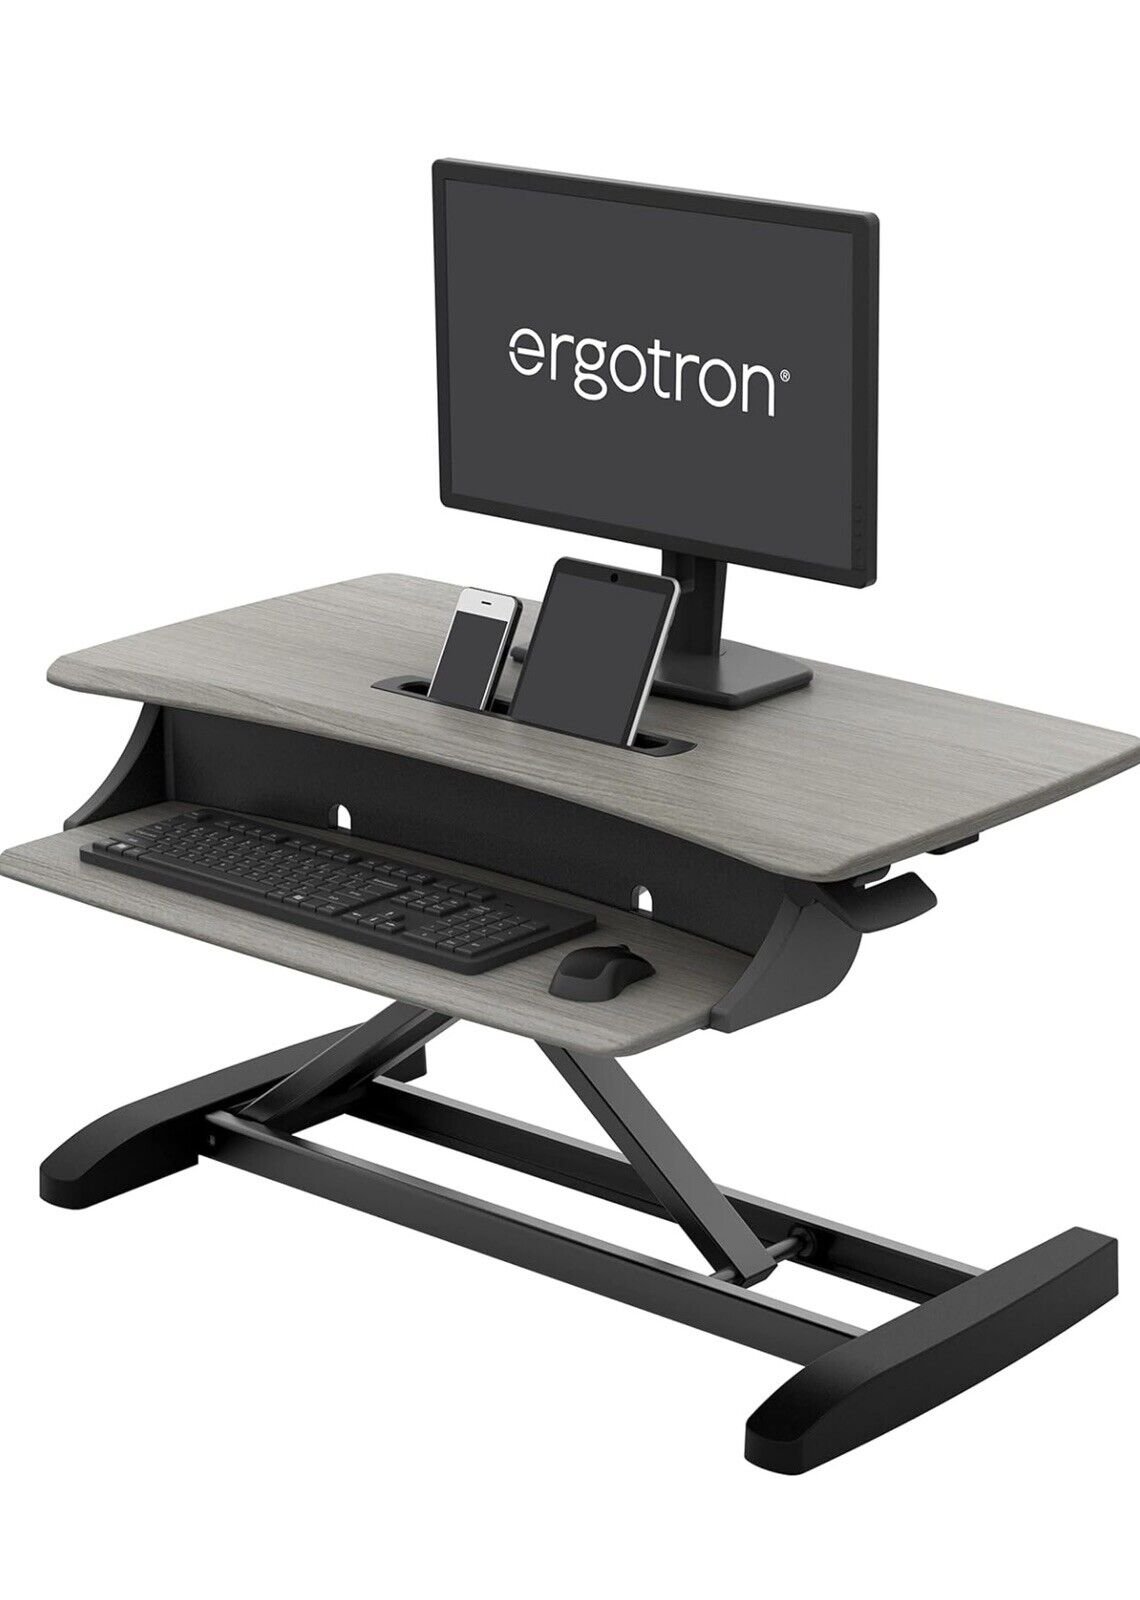 Ergotron WorkFit-TL Sit Stand Desktop Workstation - Black/Gray